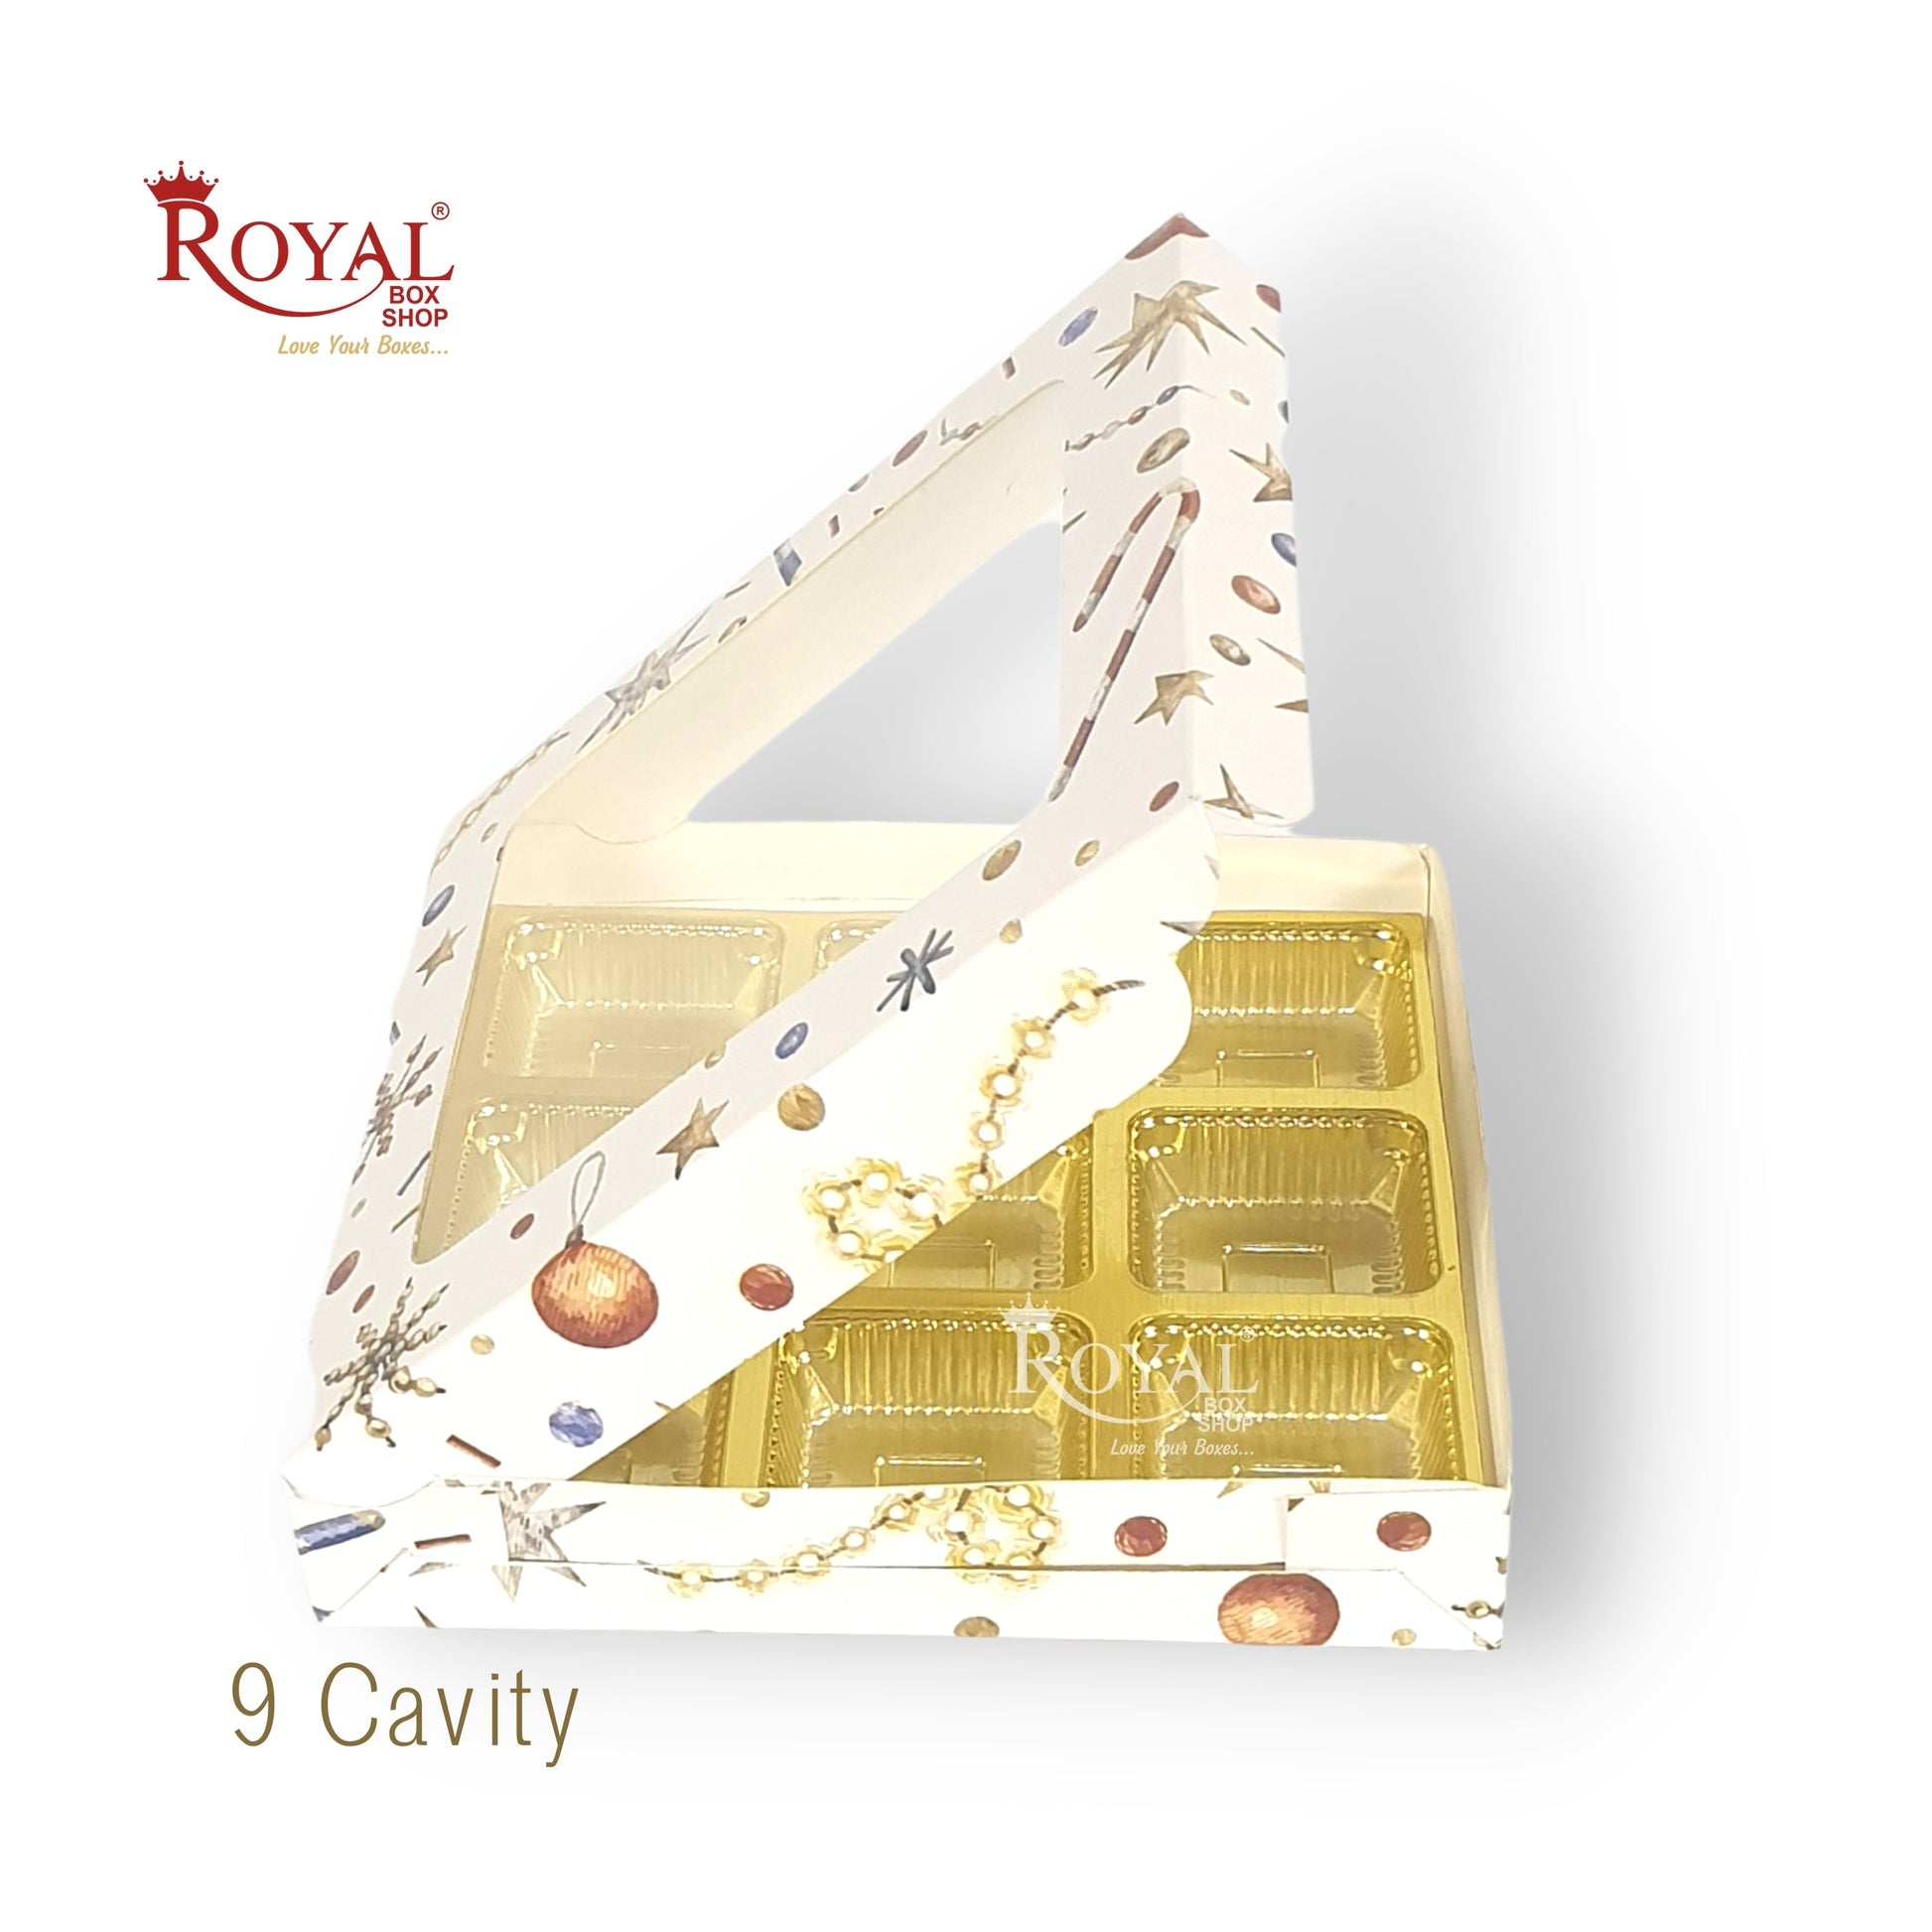 9 Cavity Christmas Chocolate Boxes with Window I White Color I For Christmas Gifting Royal Box Shop